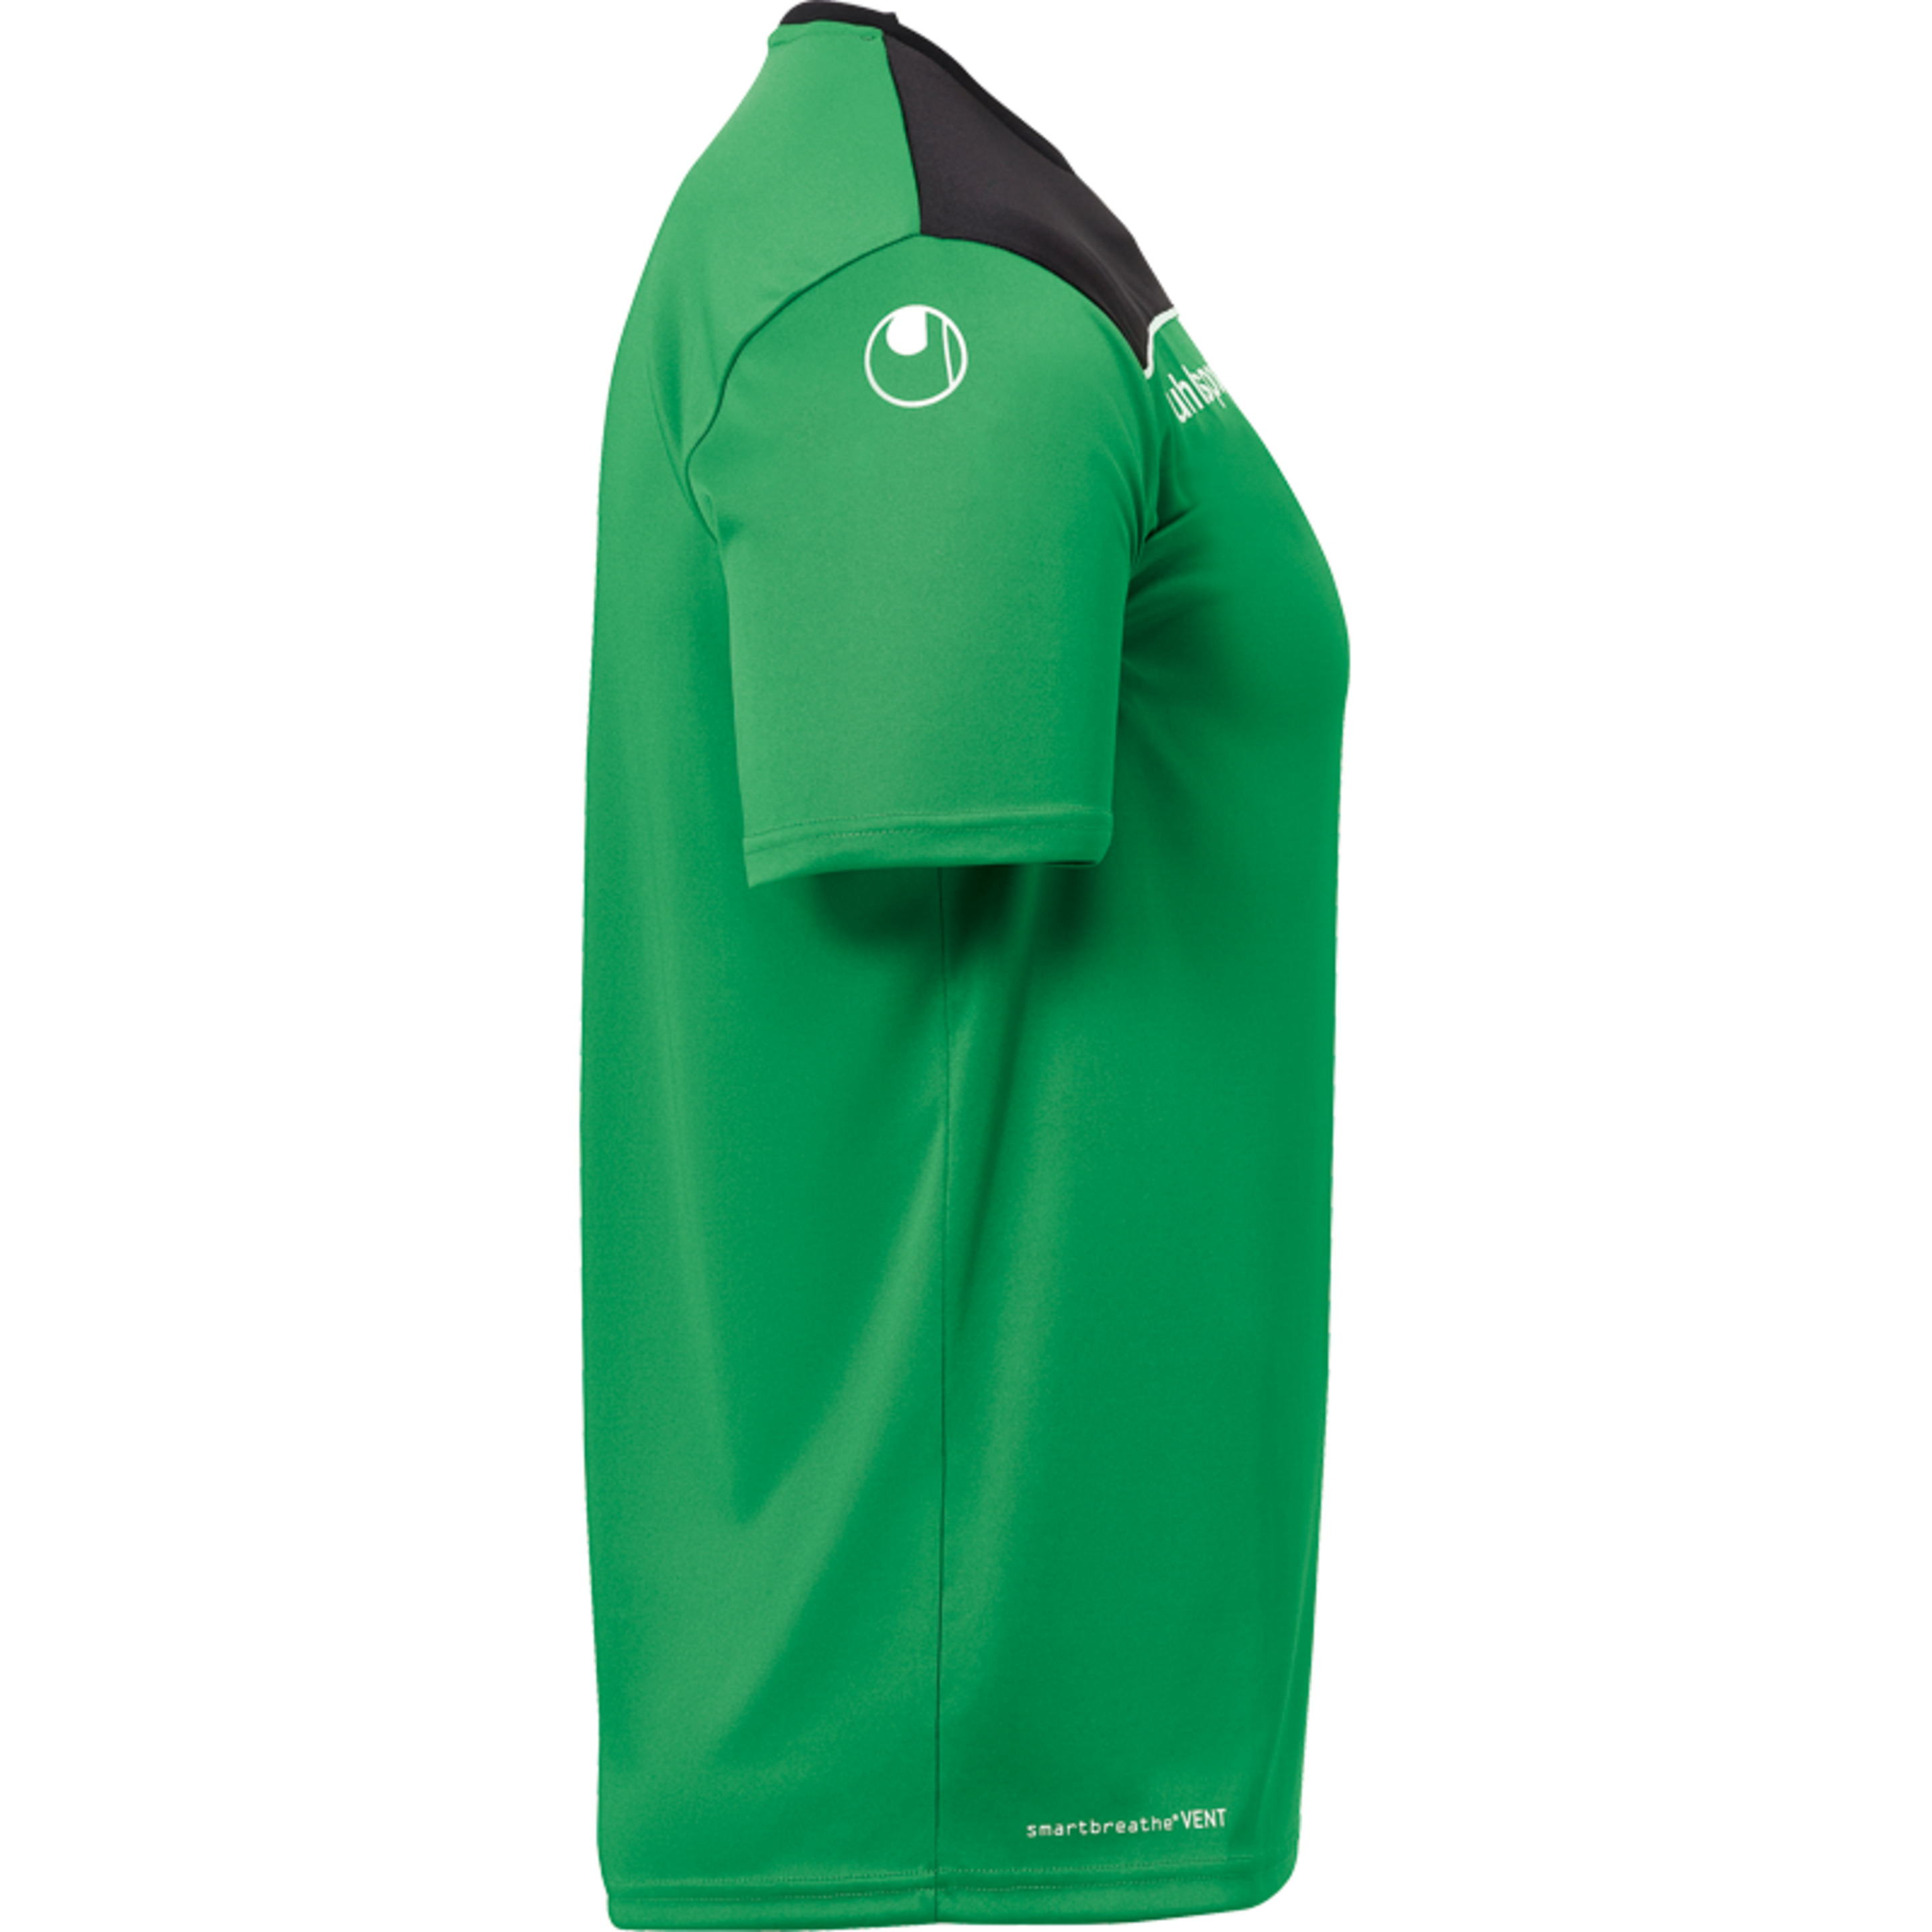 Offense 23 Poly Shirt Verde/negro/blanco Uhlsport